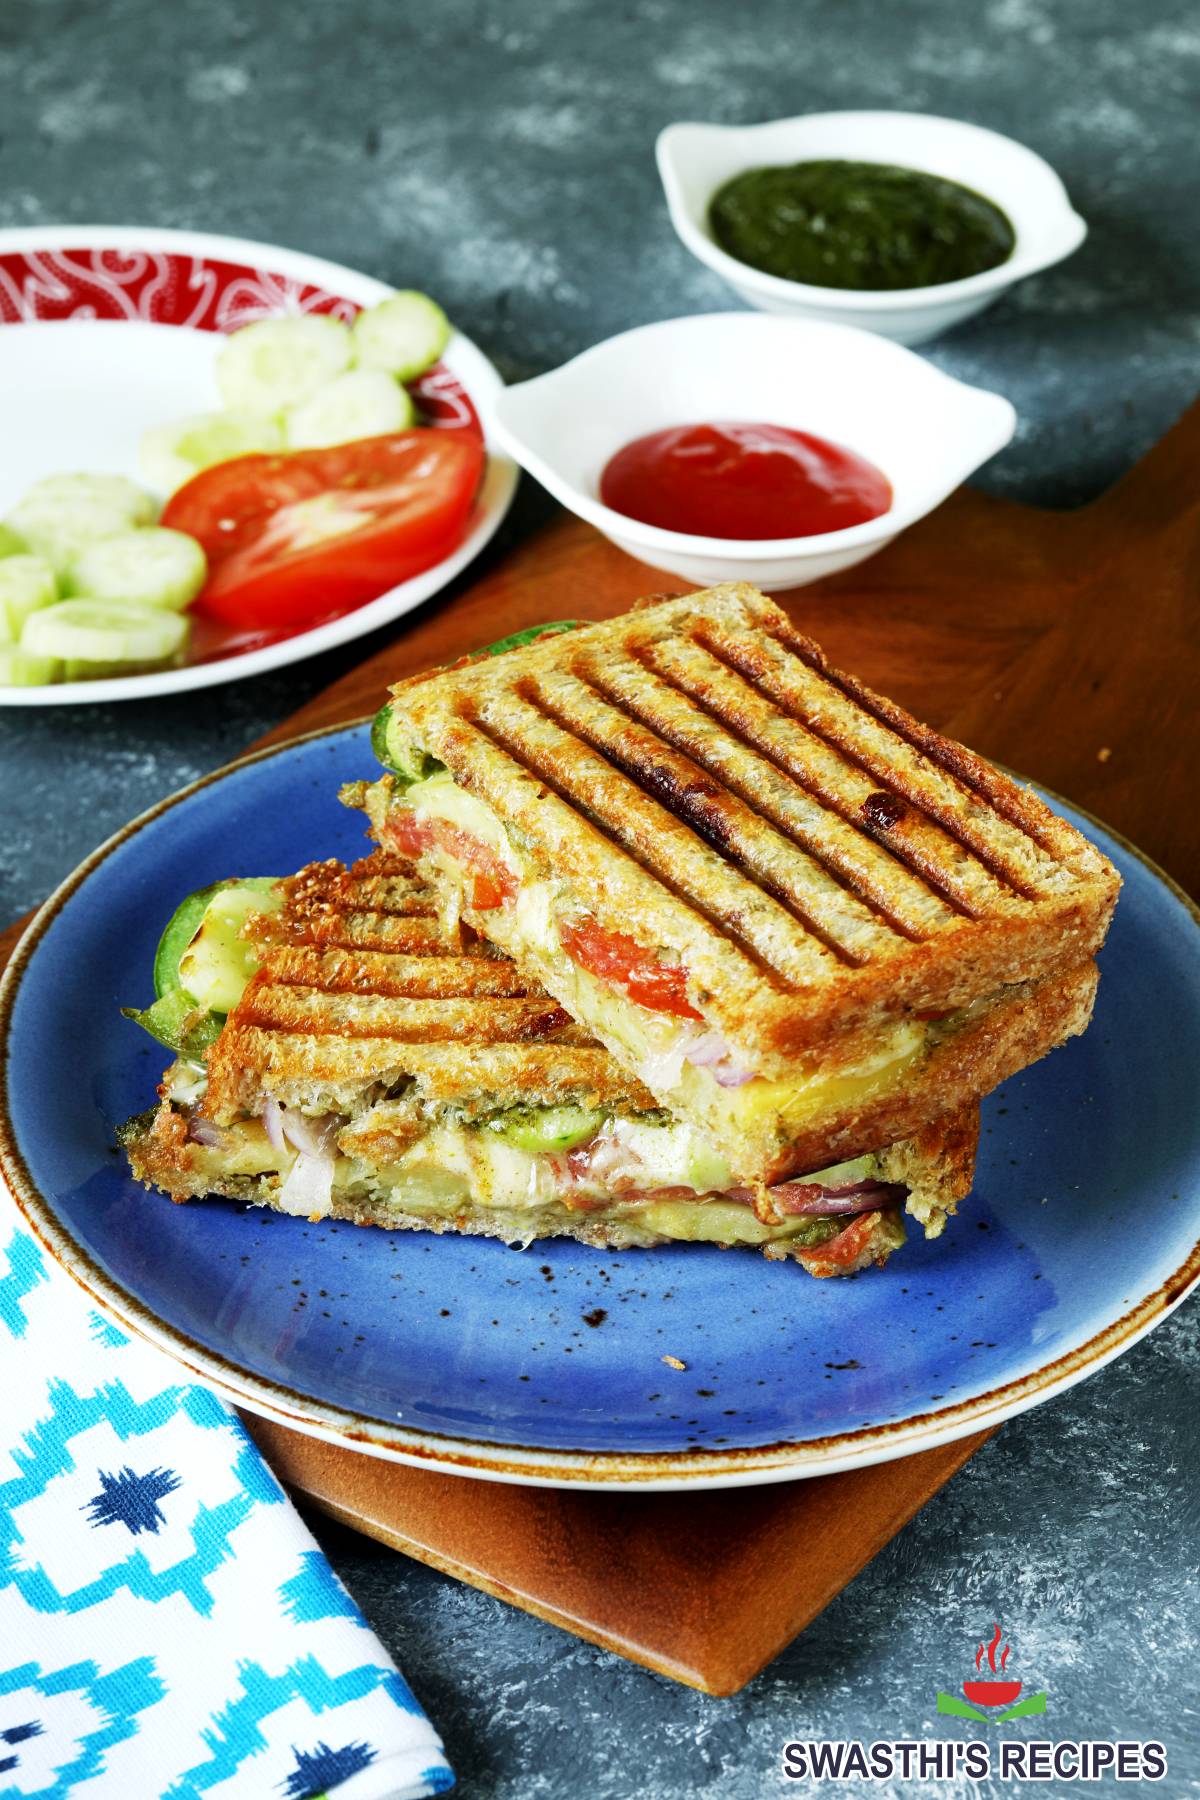 Veg Grilled Sandwich Recipe